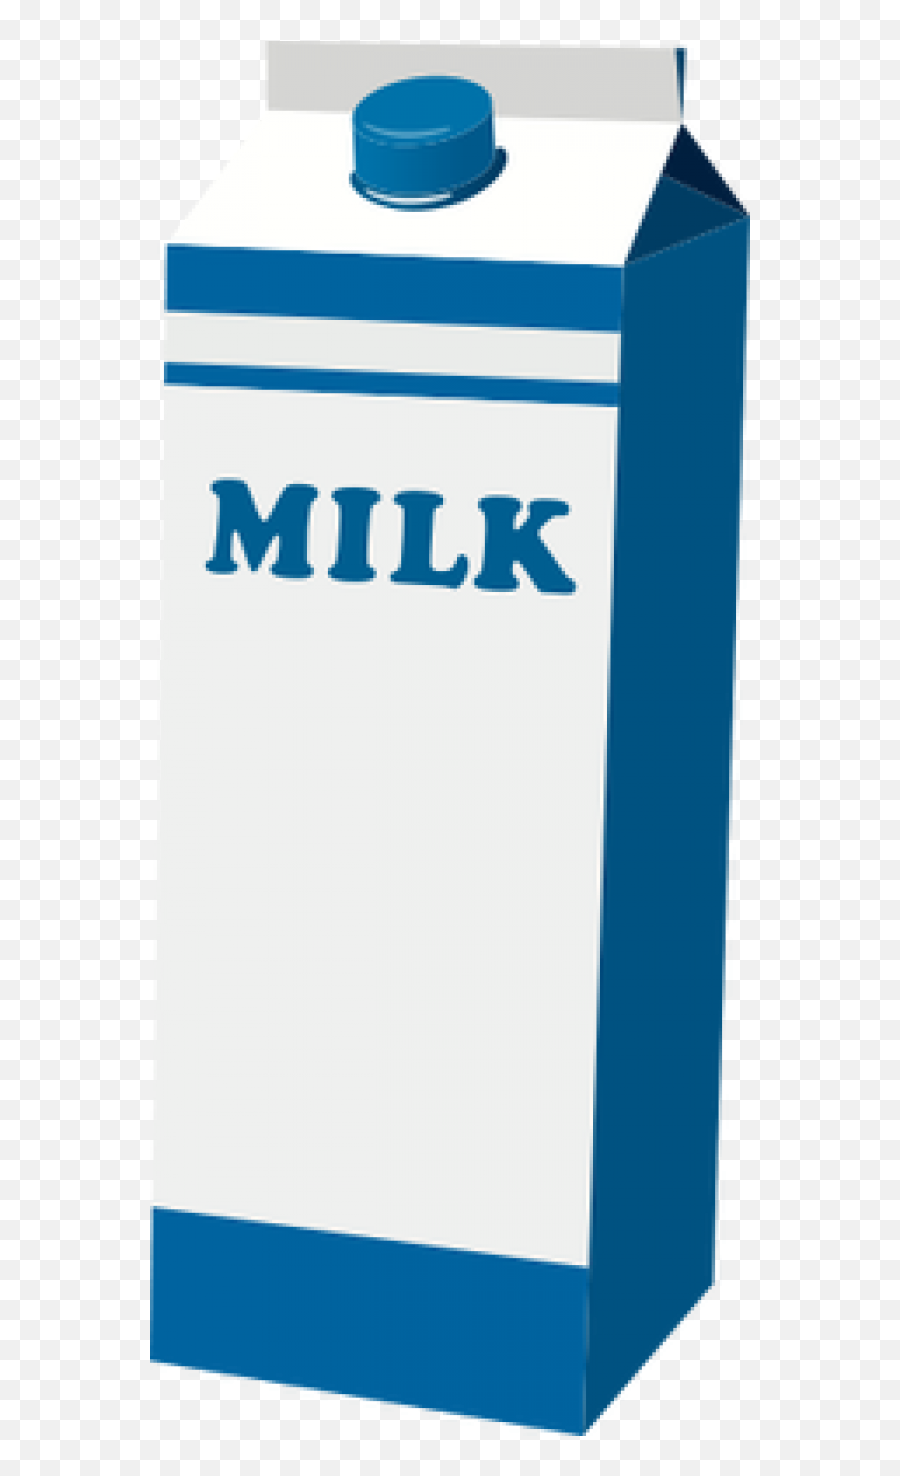 Milk Png Free Download - Transparent Background Milk Carton Transparent,Milk Carton Png